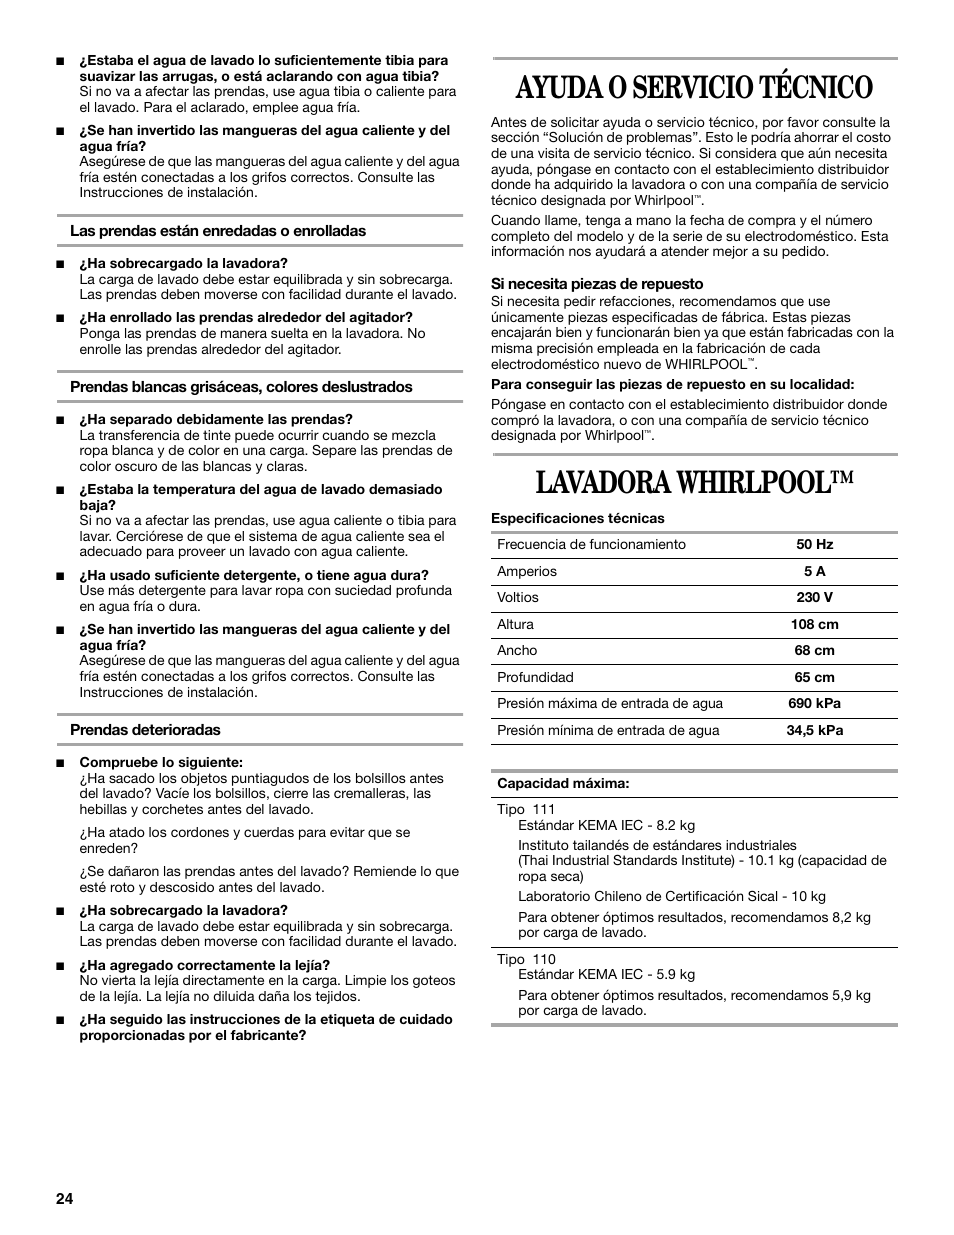 Ayuda servicio técnico, Lavadora whirlpool | Whirlpool 3XWTW5705 User Manual | Page 24 / 36 | Original mode